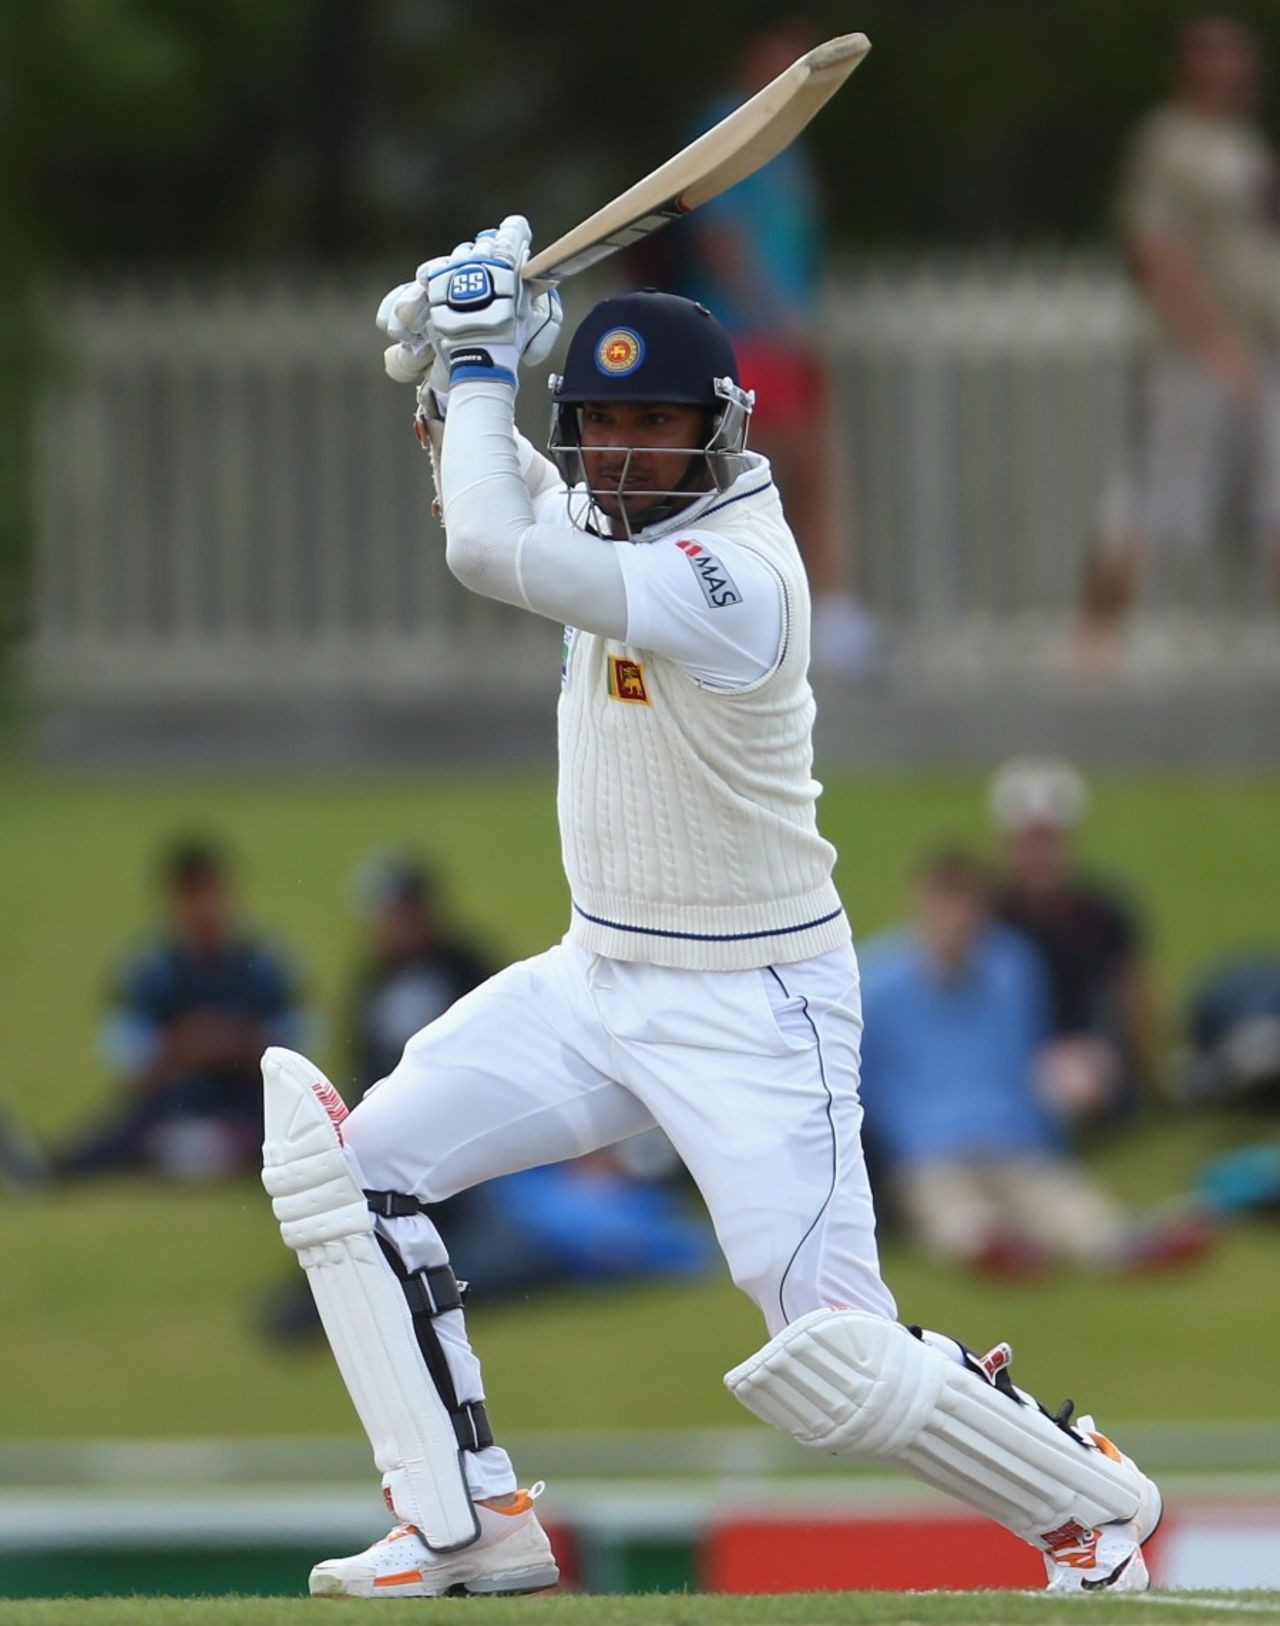 Kumar Sangakkara drives through the off side, Australia v Sri Lanka, 1st Test, Hobart, 5th day, December 18, 2012